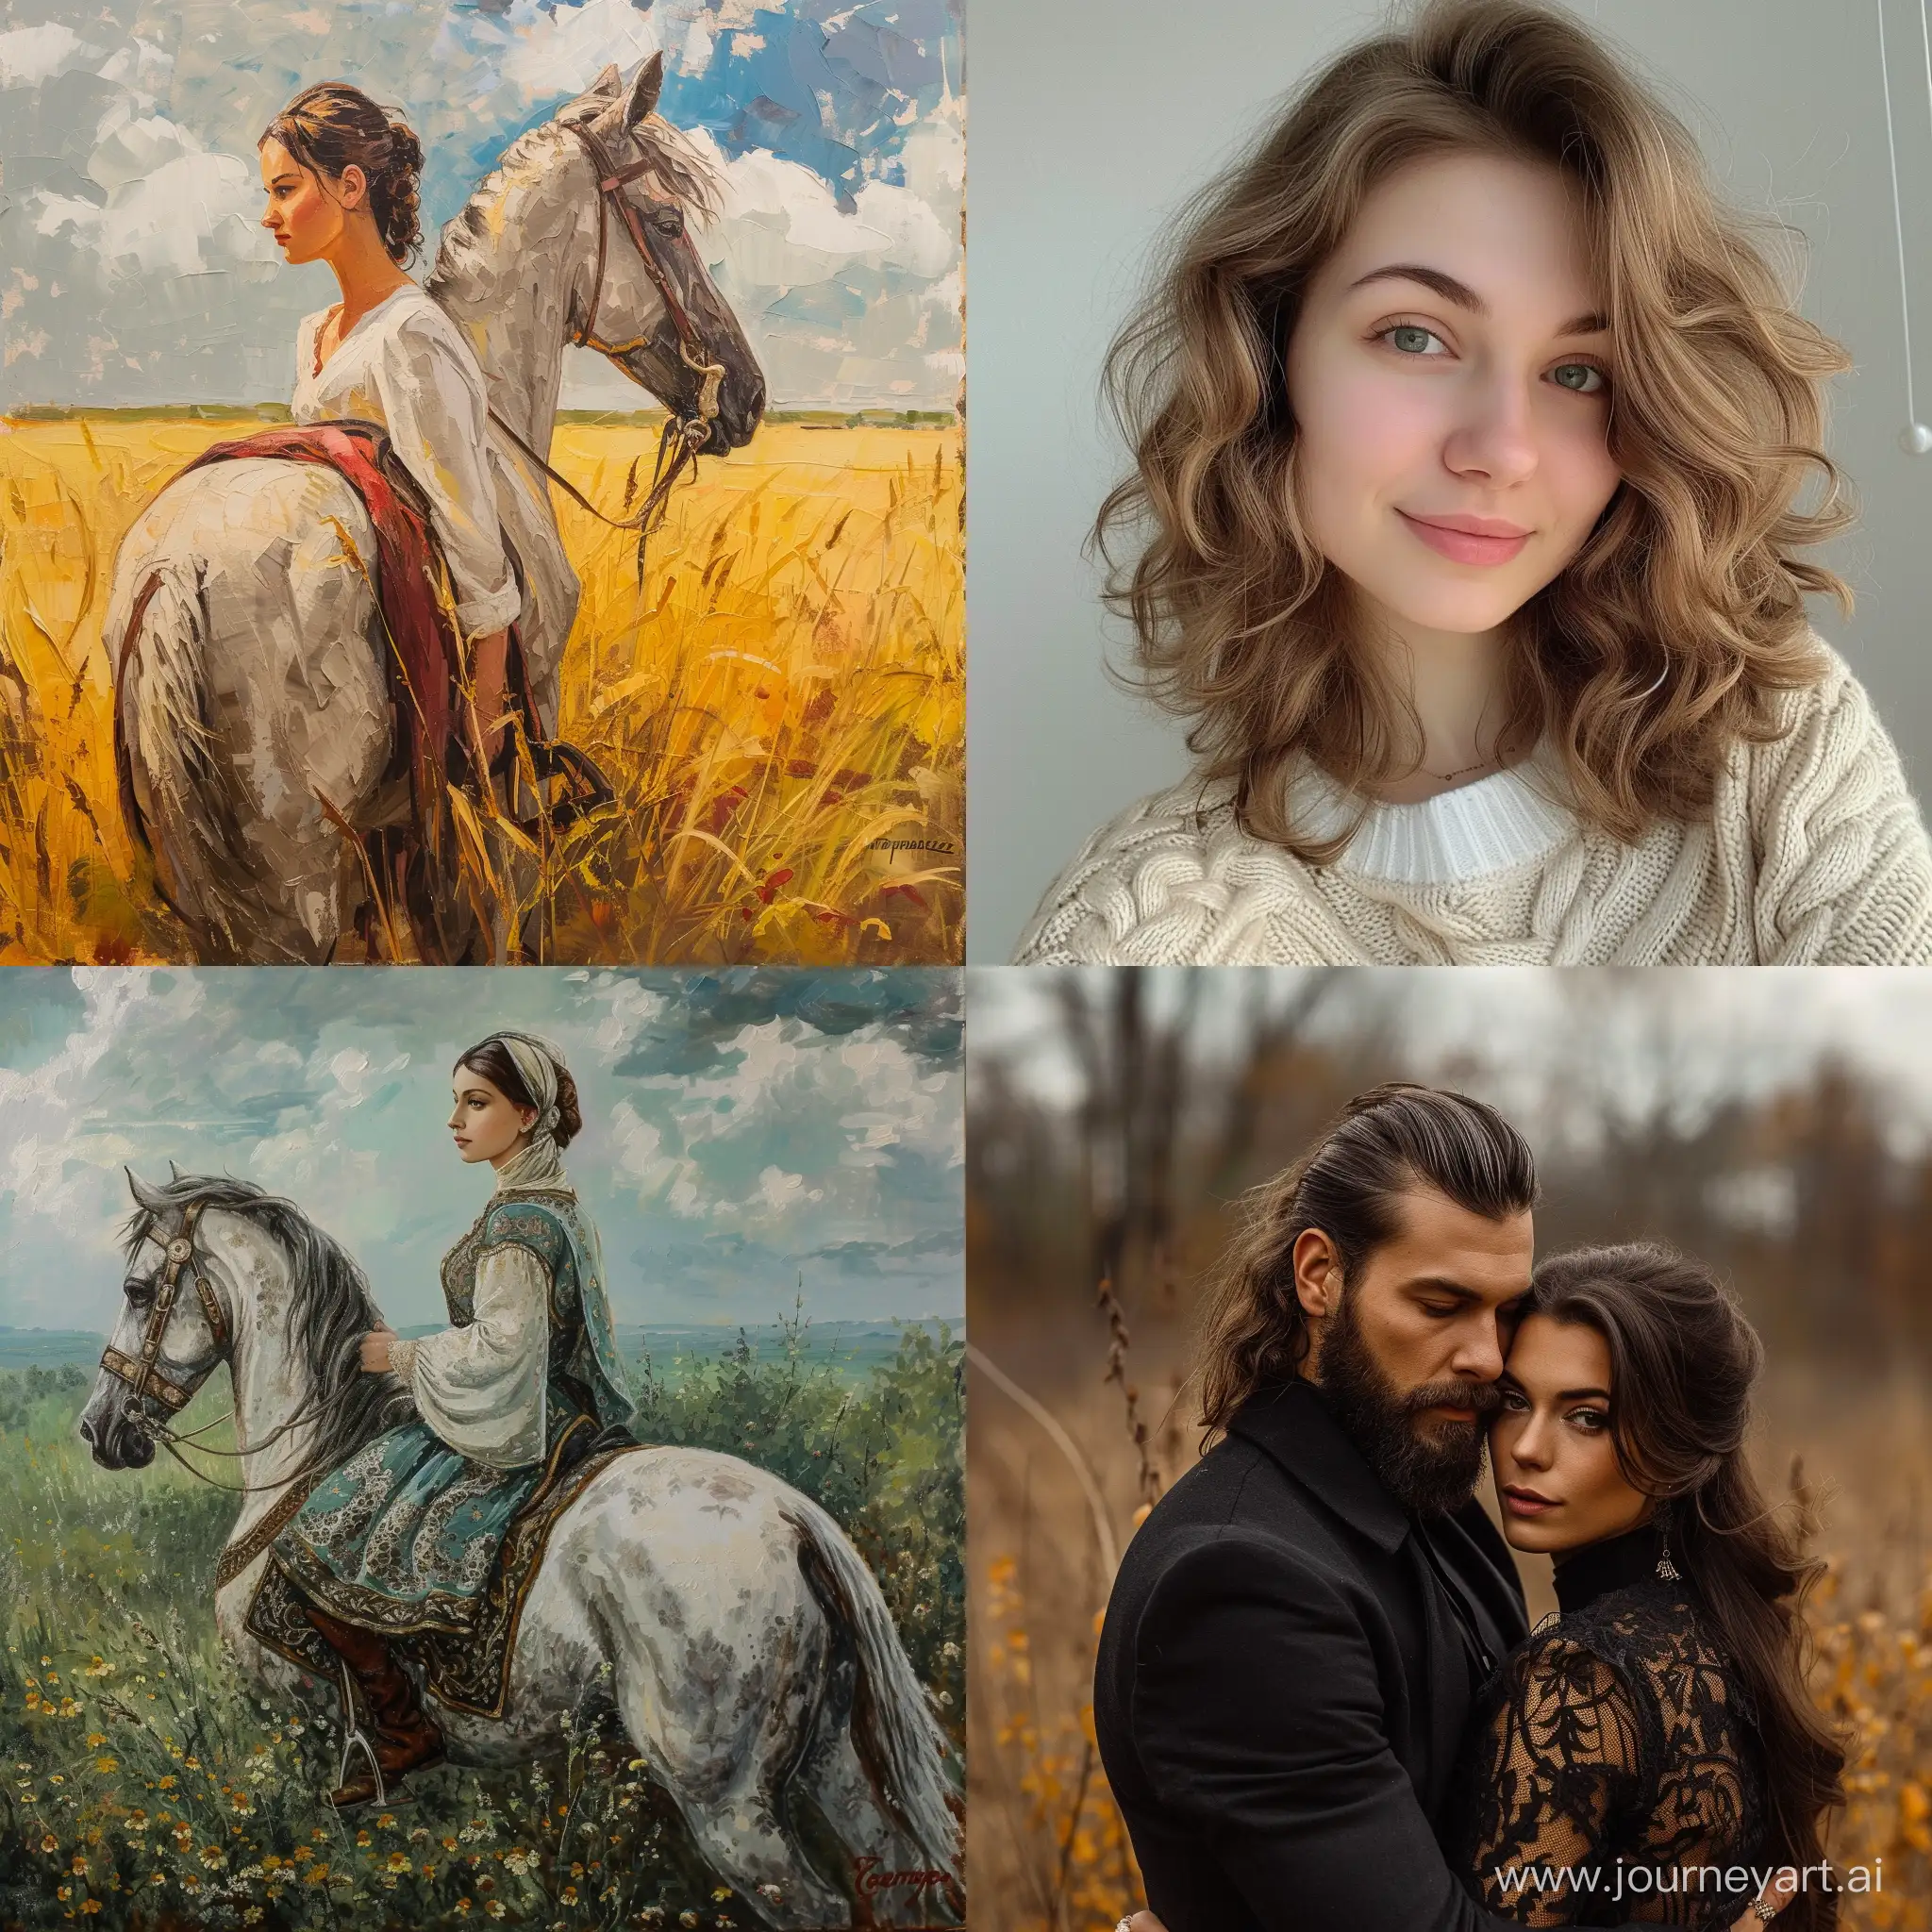 Equestrian-Journey-with-Bakaradzevna-and-Artem-in-a-61-Aspect-Ratio